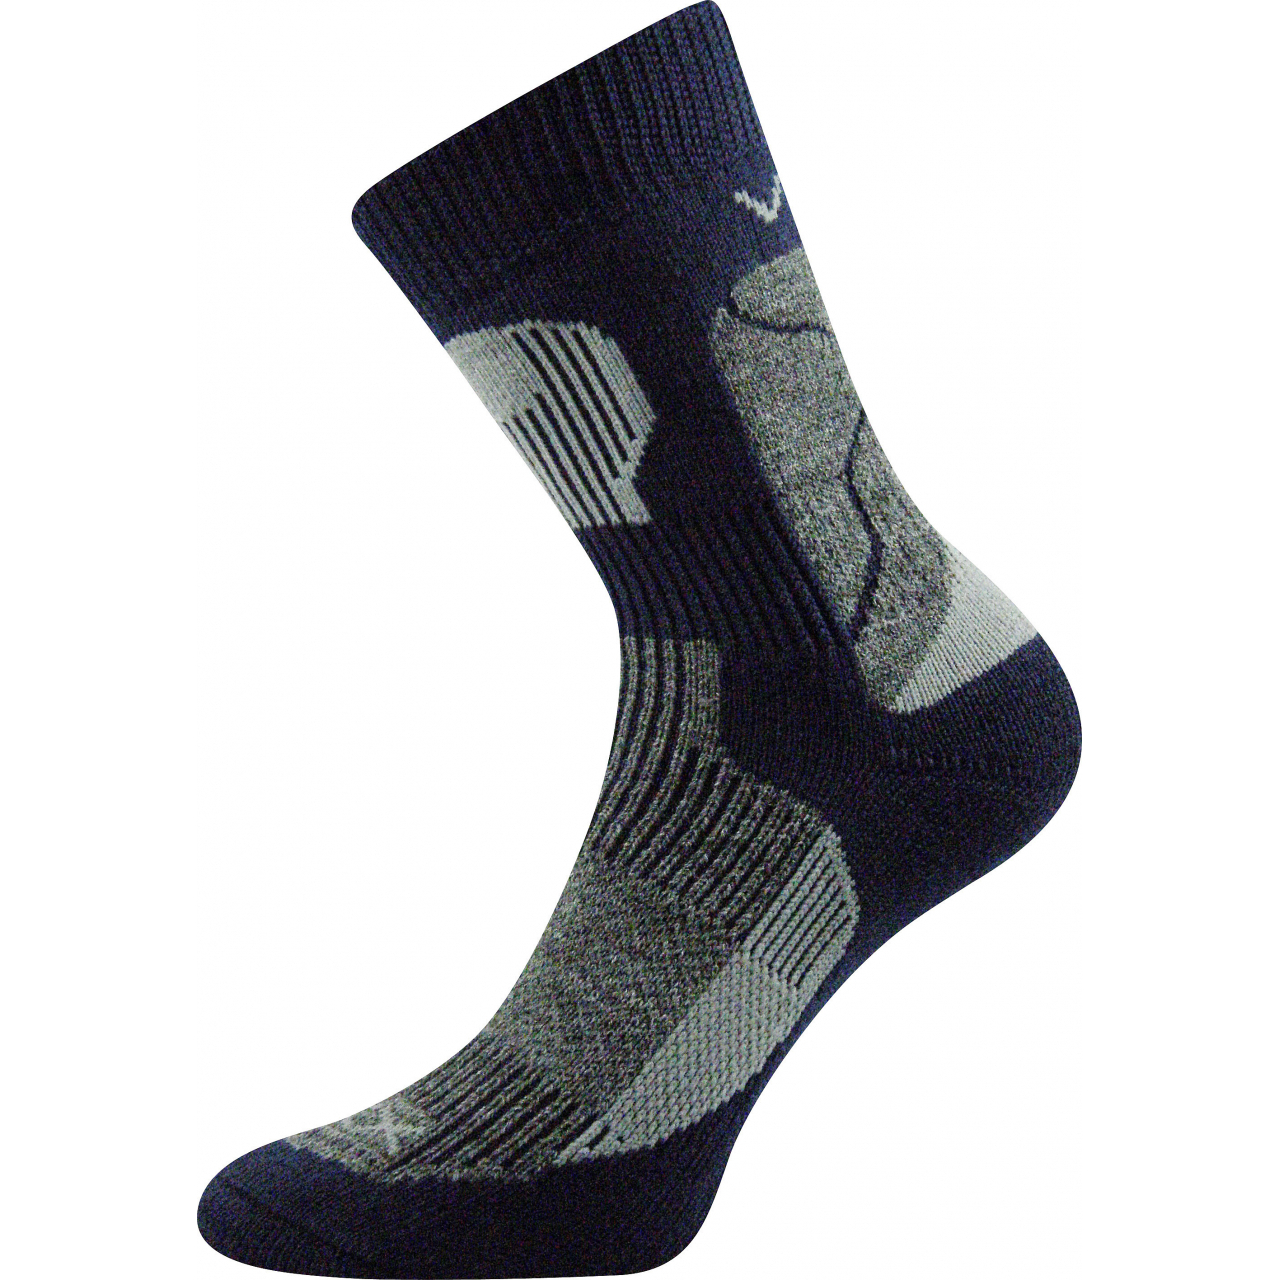 Ponožky unisex termo Voxx Treking - tmavě modré-šedé, 46-48